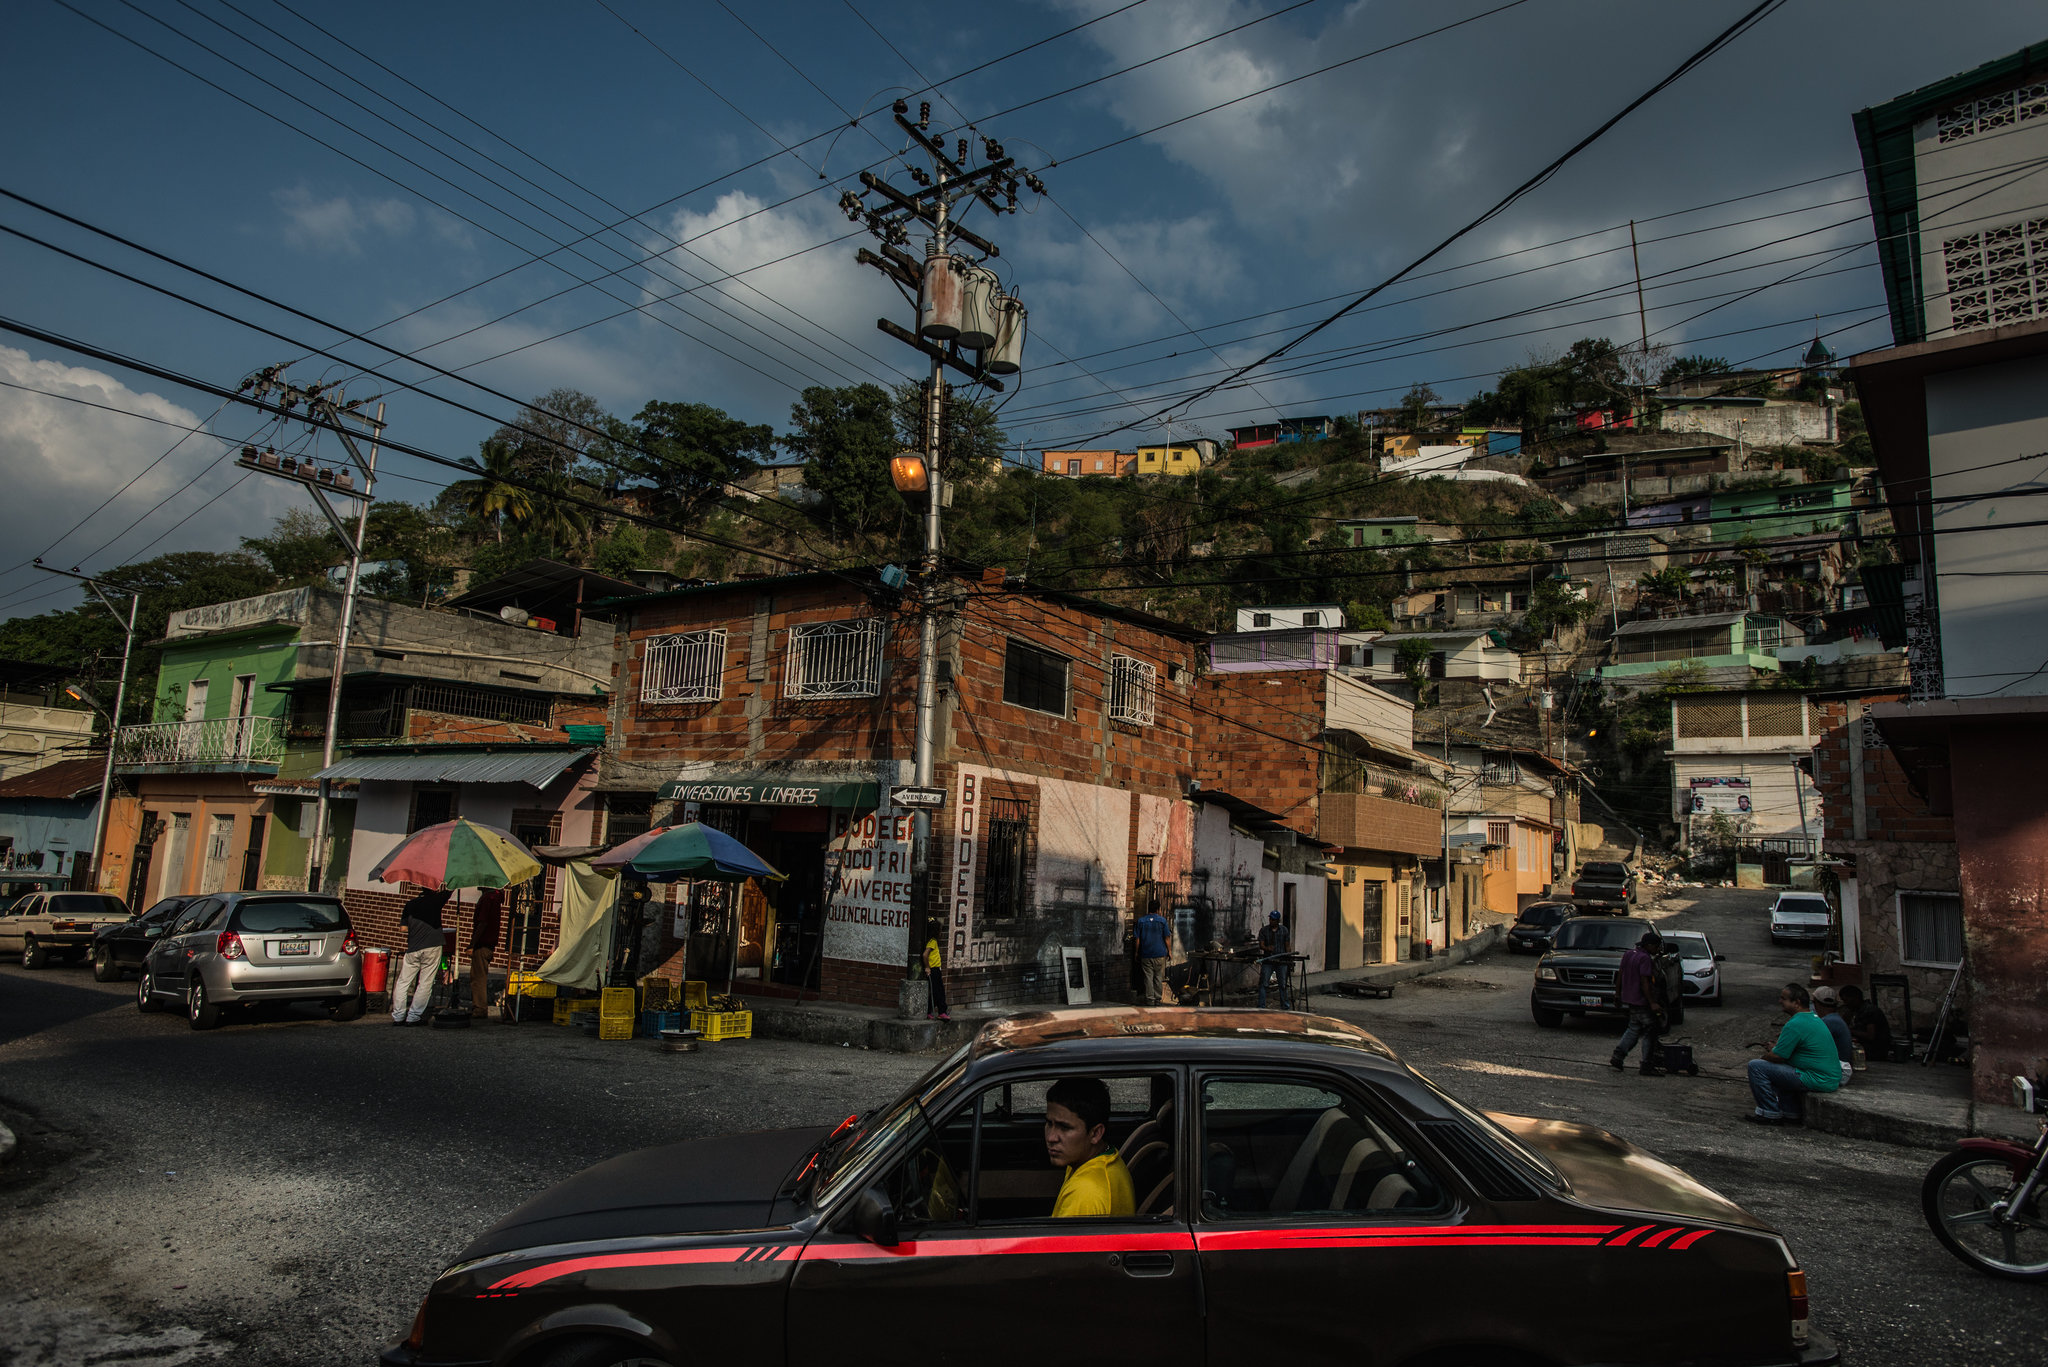 Provea: 23 millones de venezolanos viven en pobreza